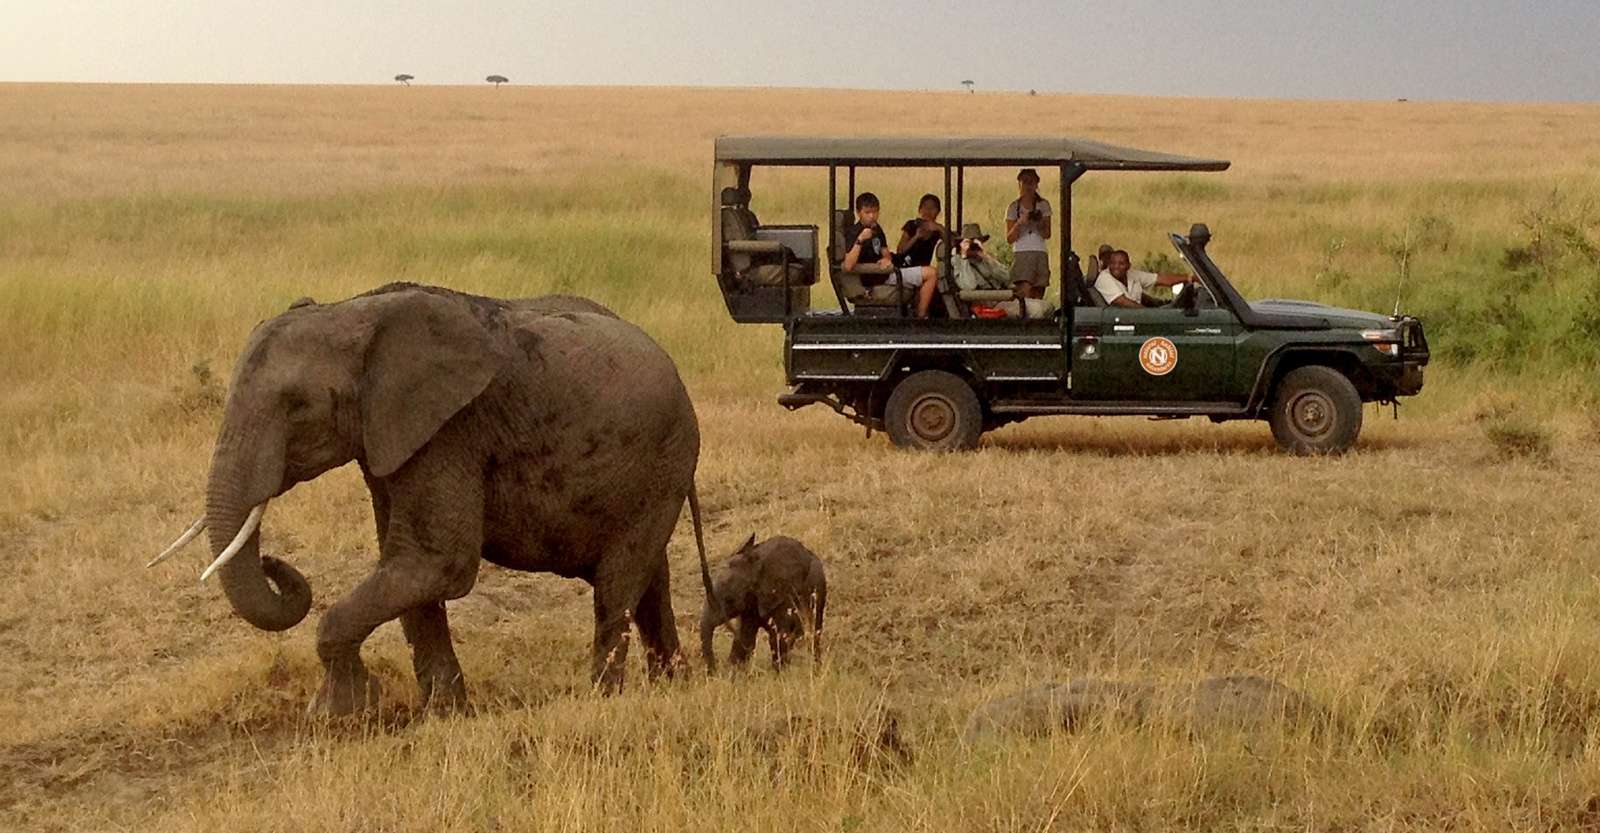 Elephants and Nat Hab guests, Mara Private Conservancy, Kenya.